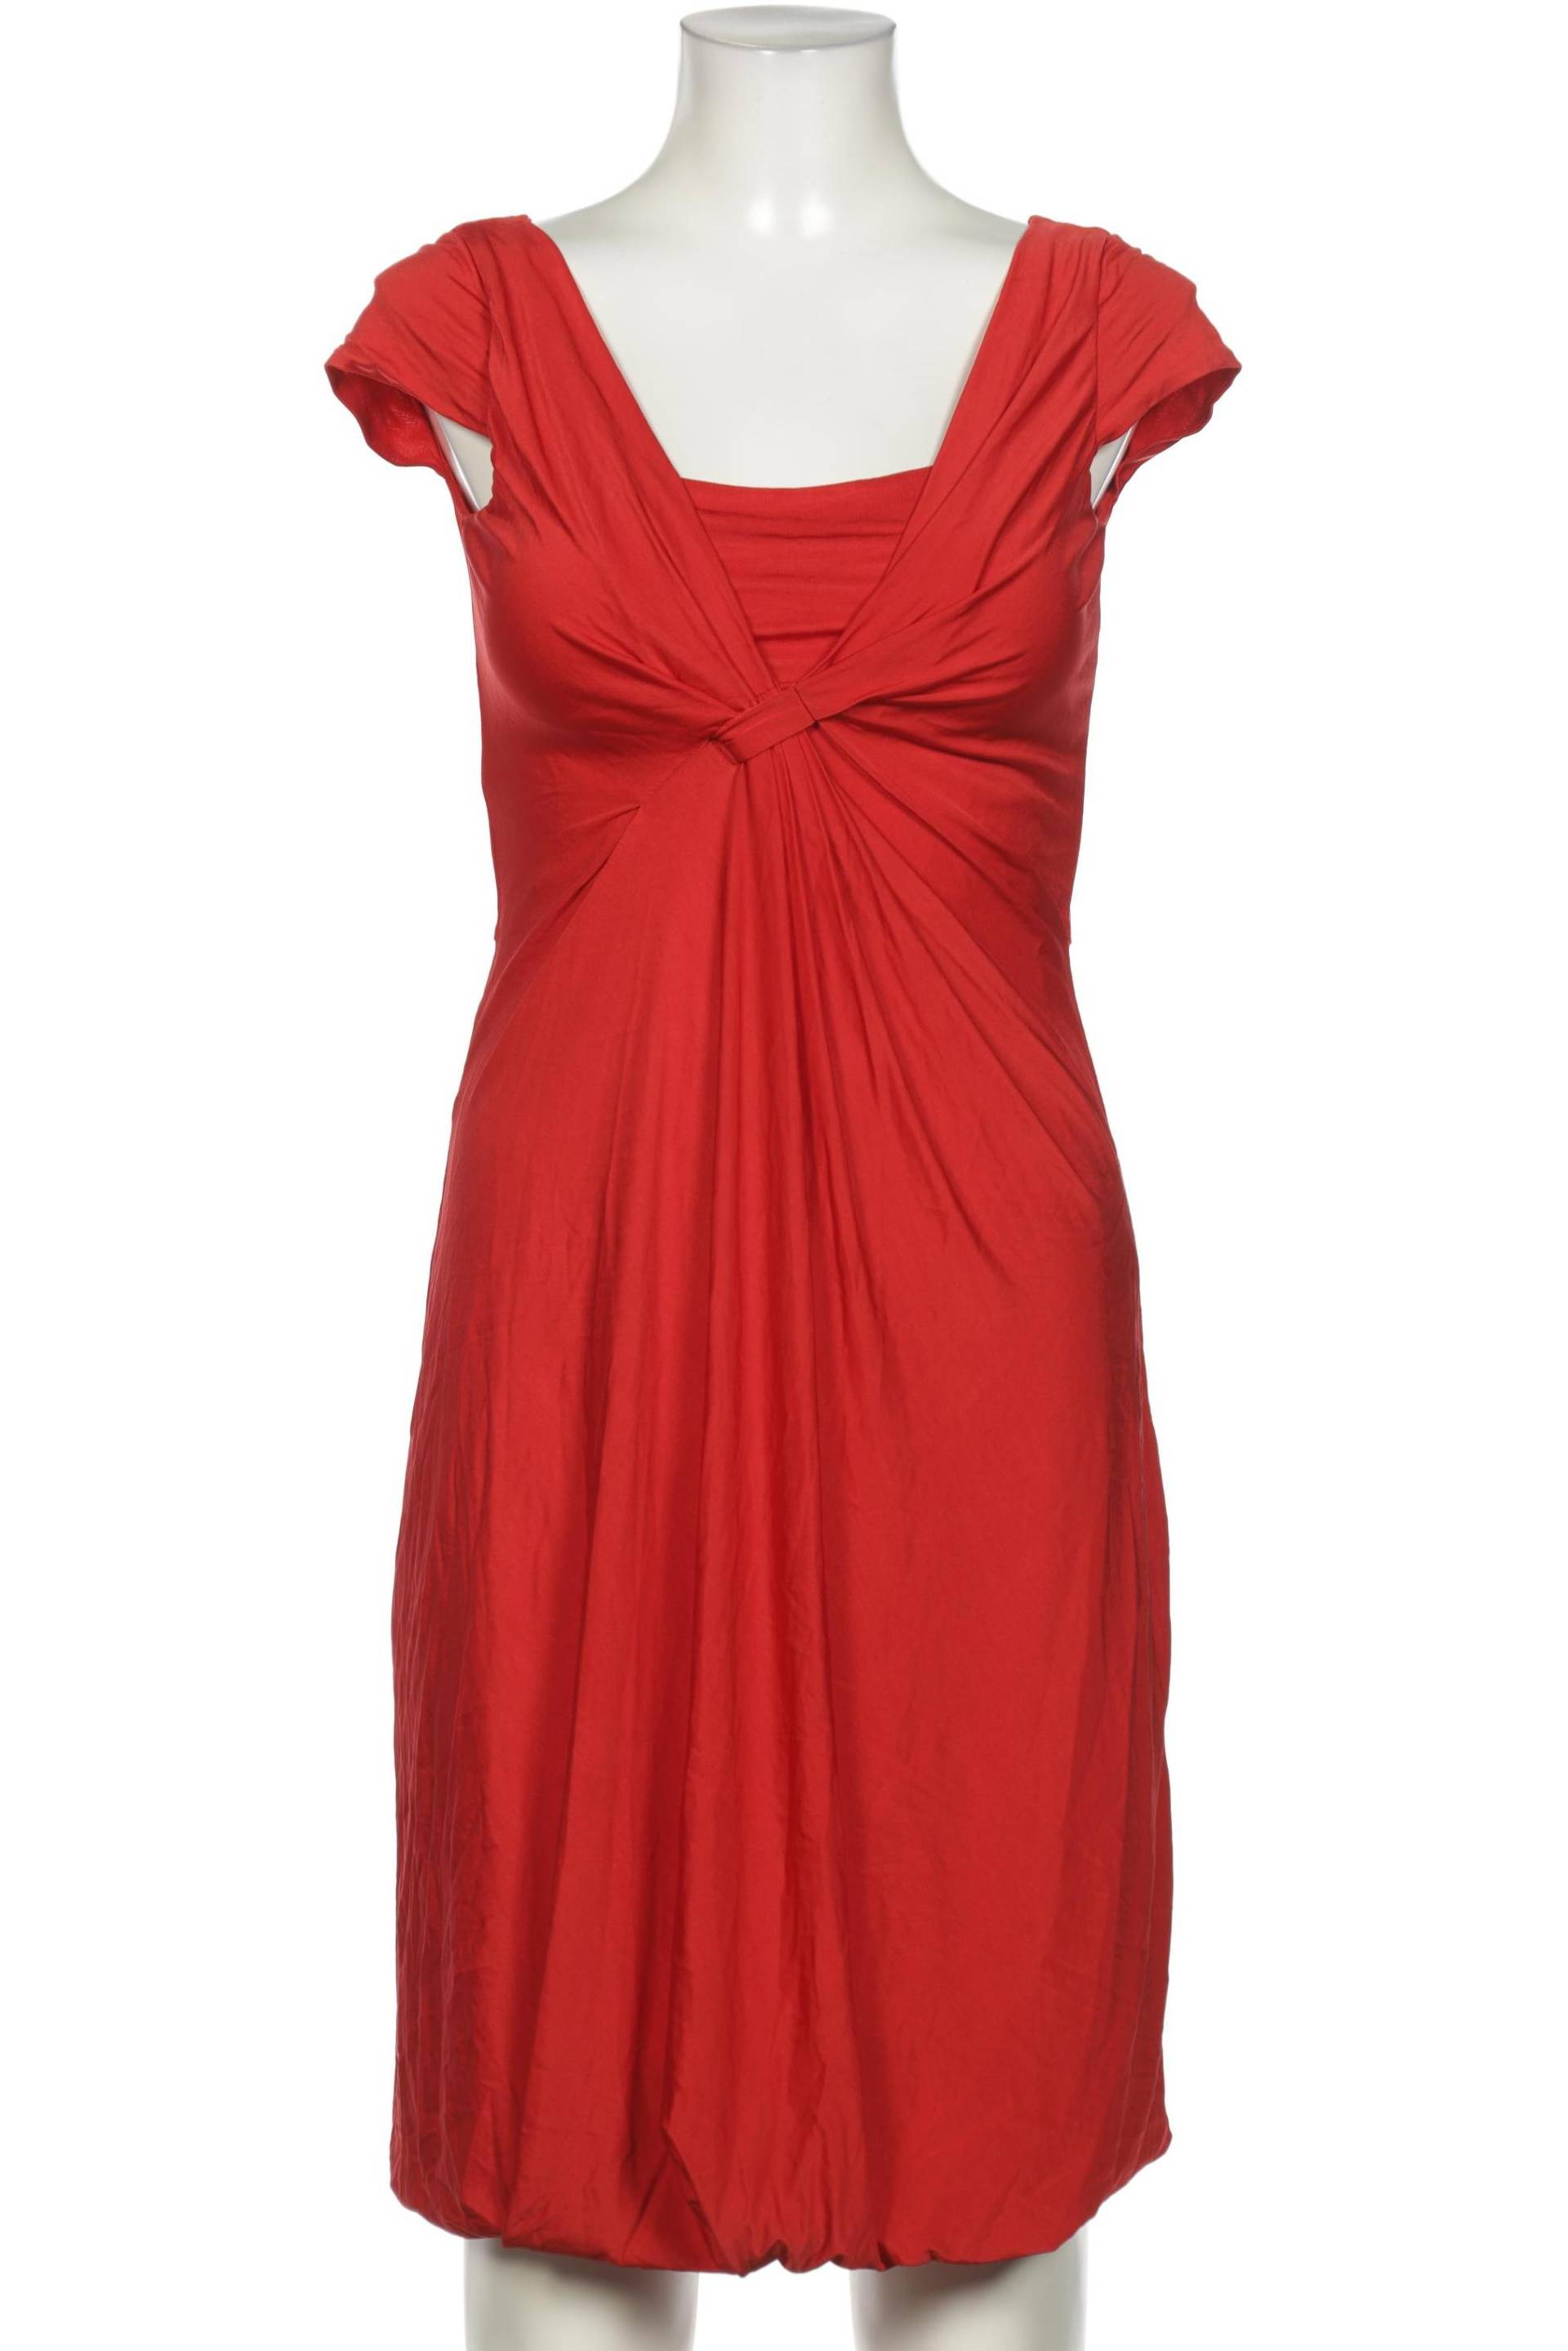 Apriori Damen Kleid, rot, Gr. 38 von Apriori